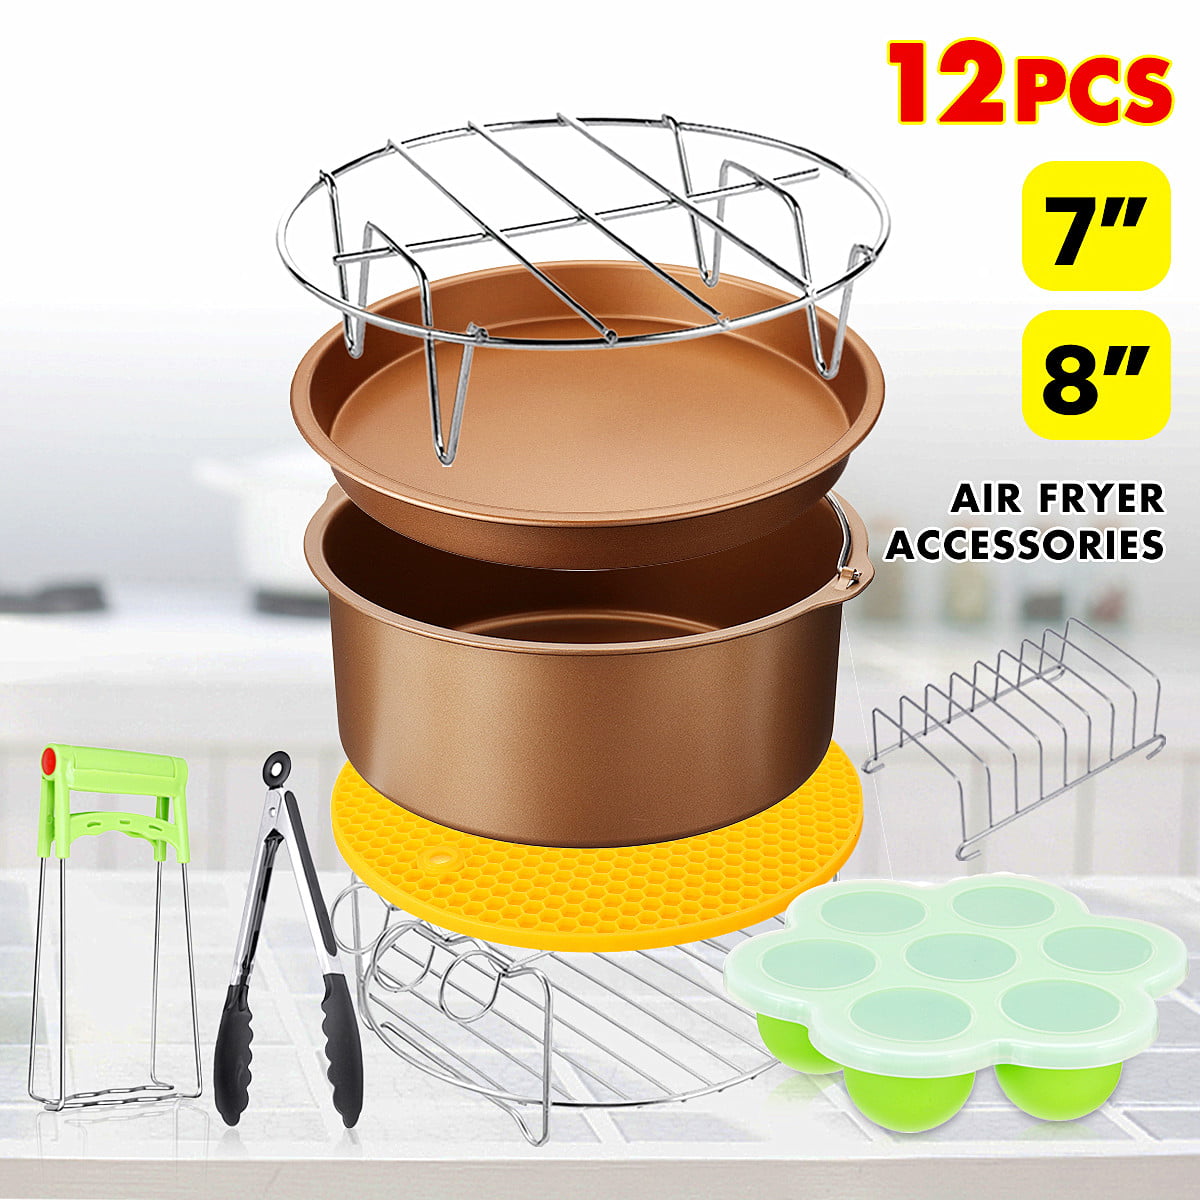 6Pcs 7" Air Fryer Accessories Set BBQ Pizza Baking Pan Tray Fit 3.2-6.8QT 